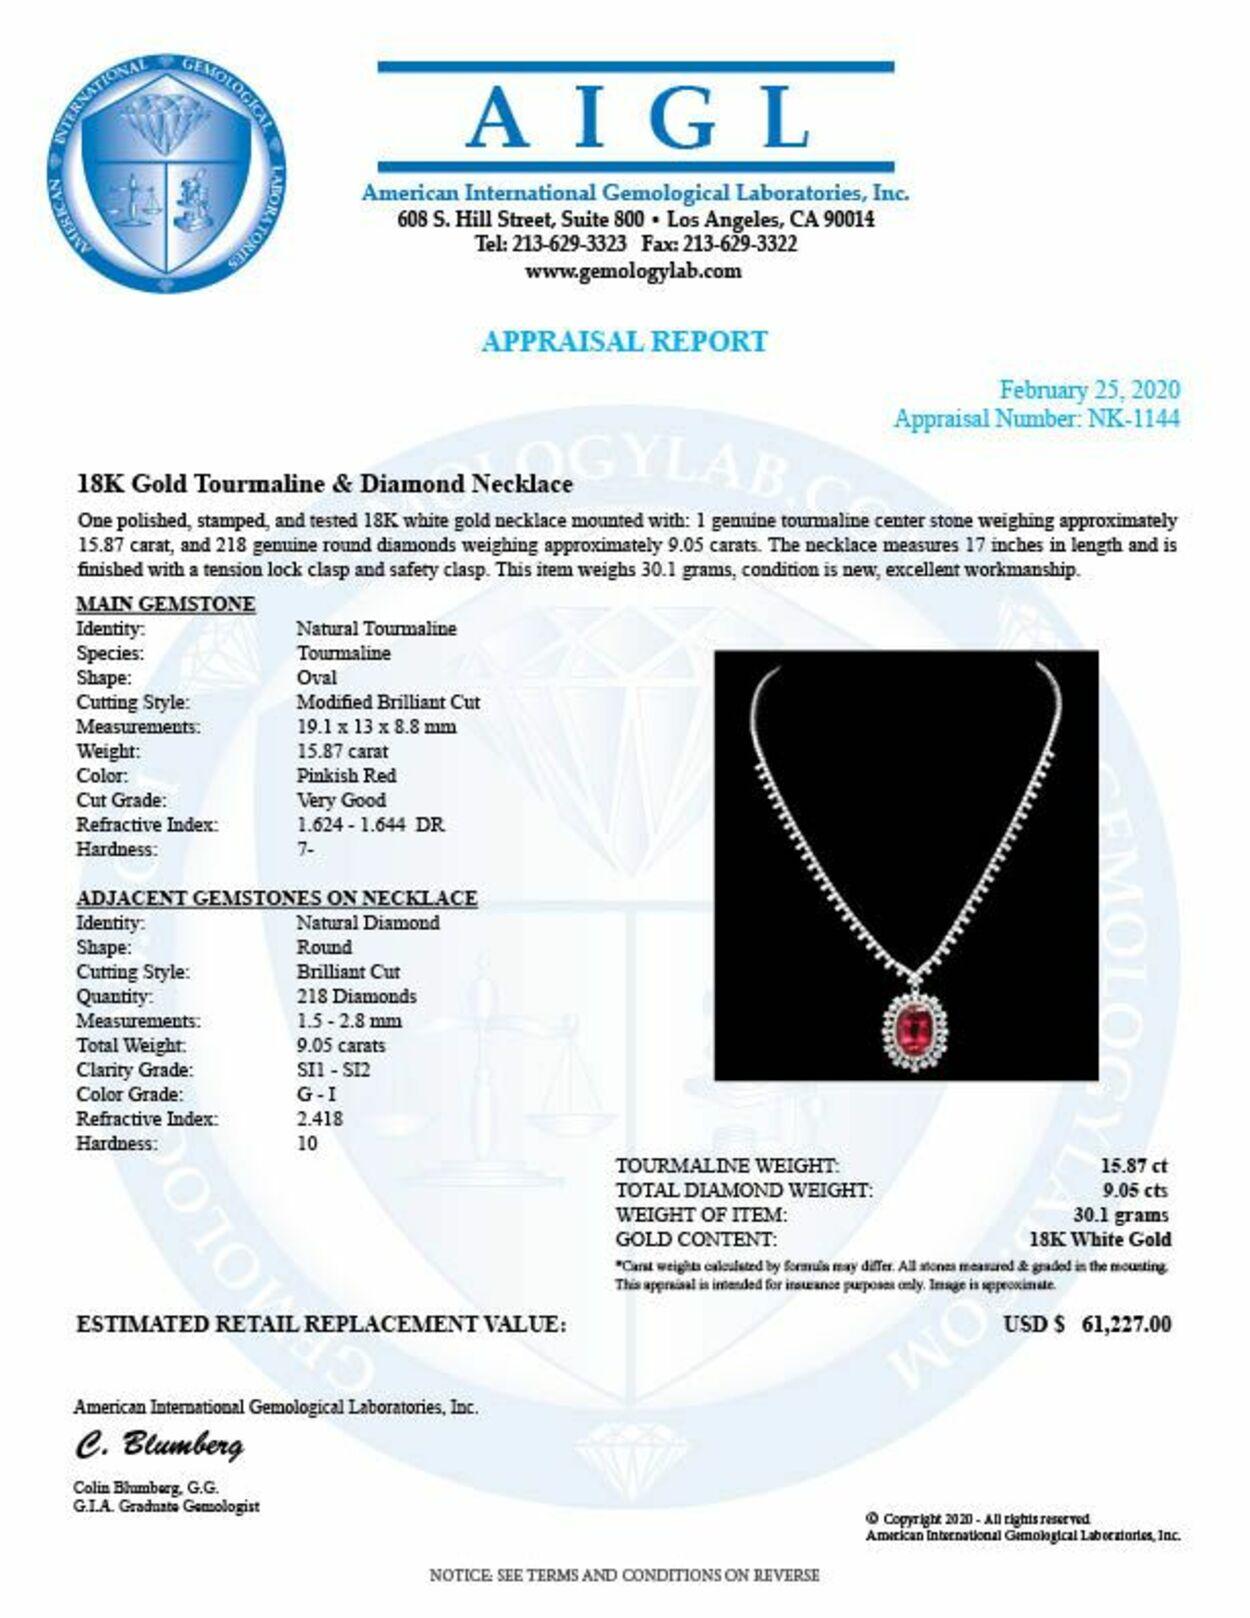 18K White Gold 15.87ct Tourmaline and 9.05ct Diamond Necklace